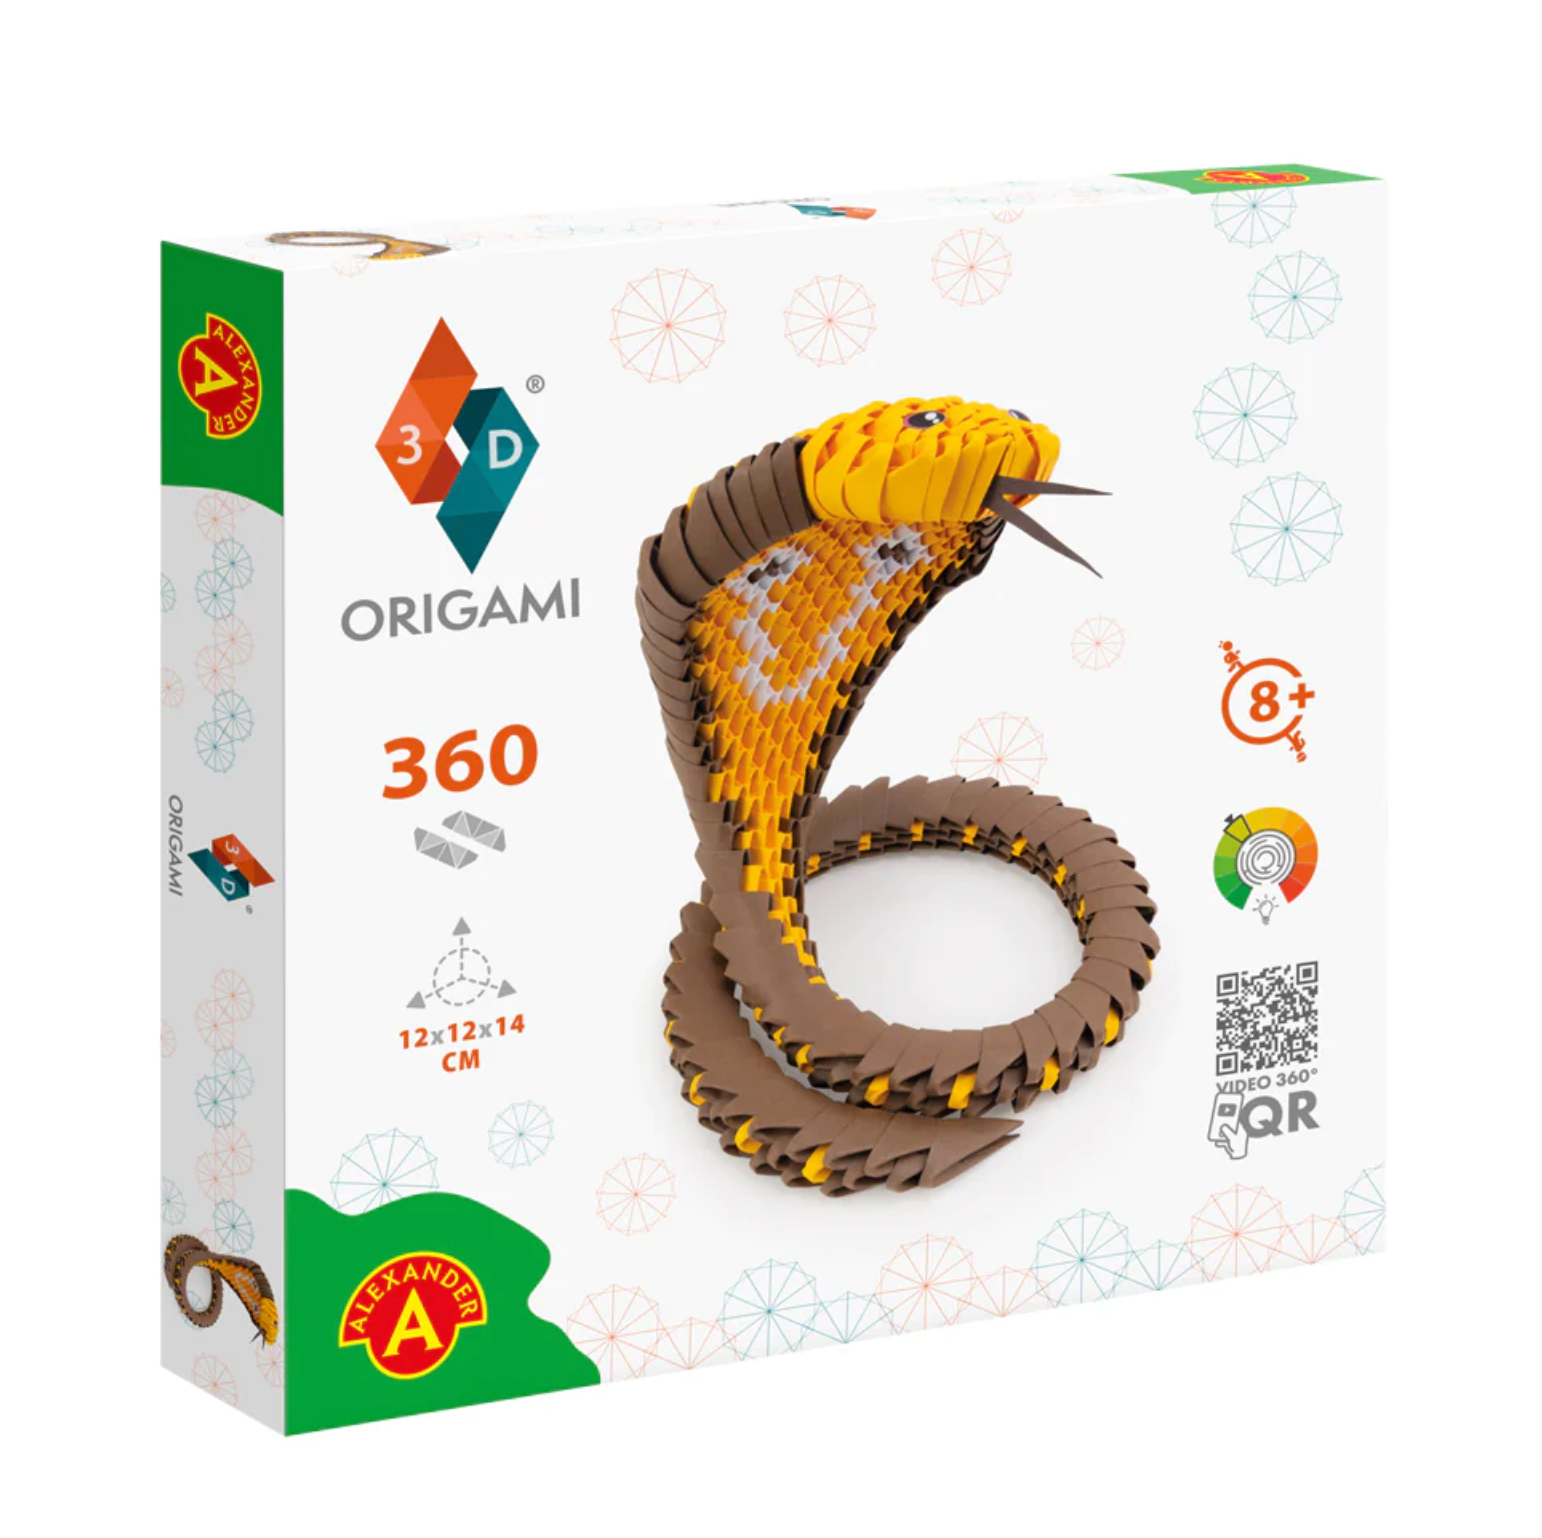 Origami 3D - Cobra